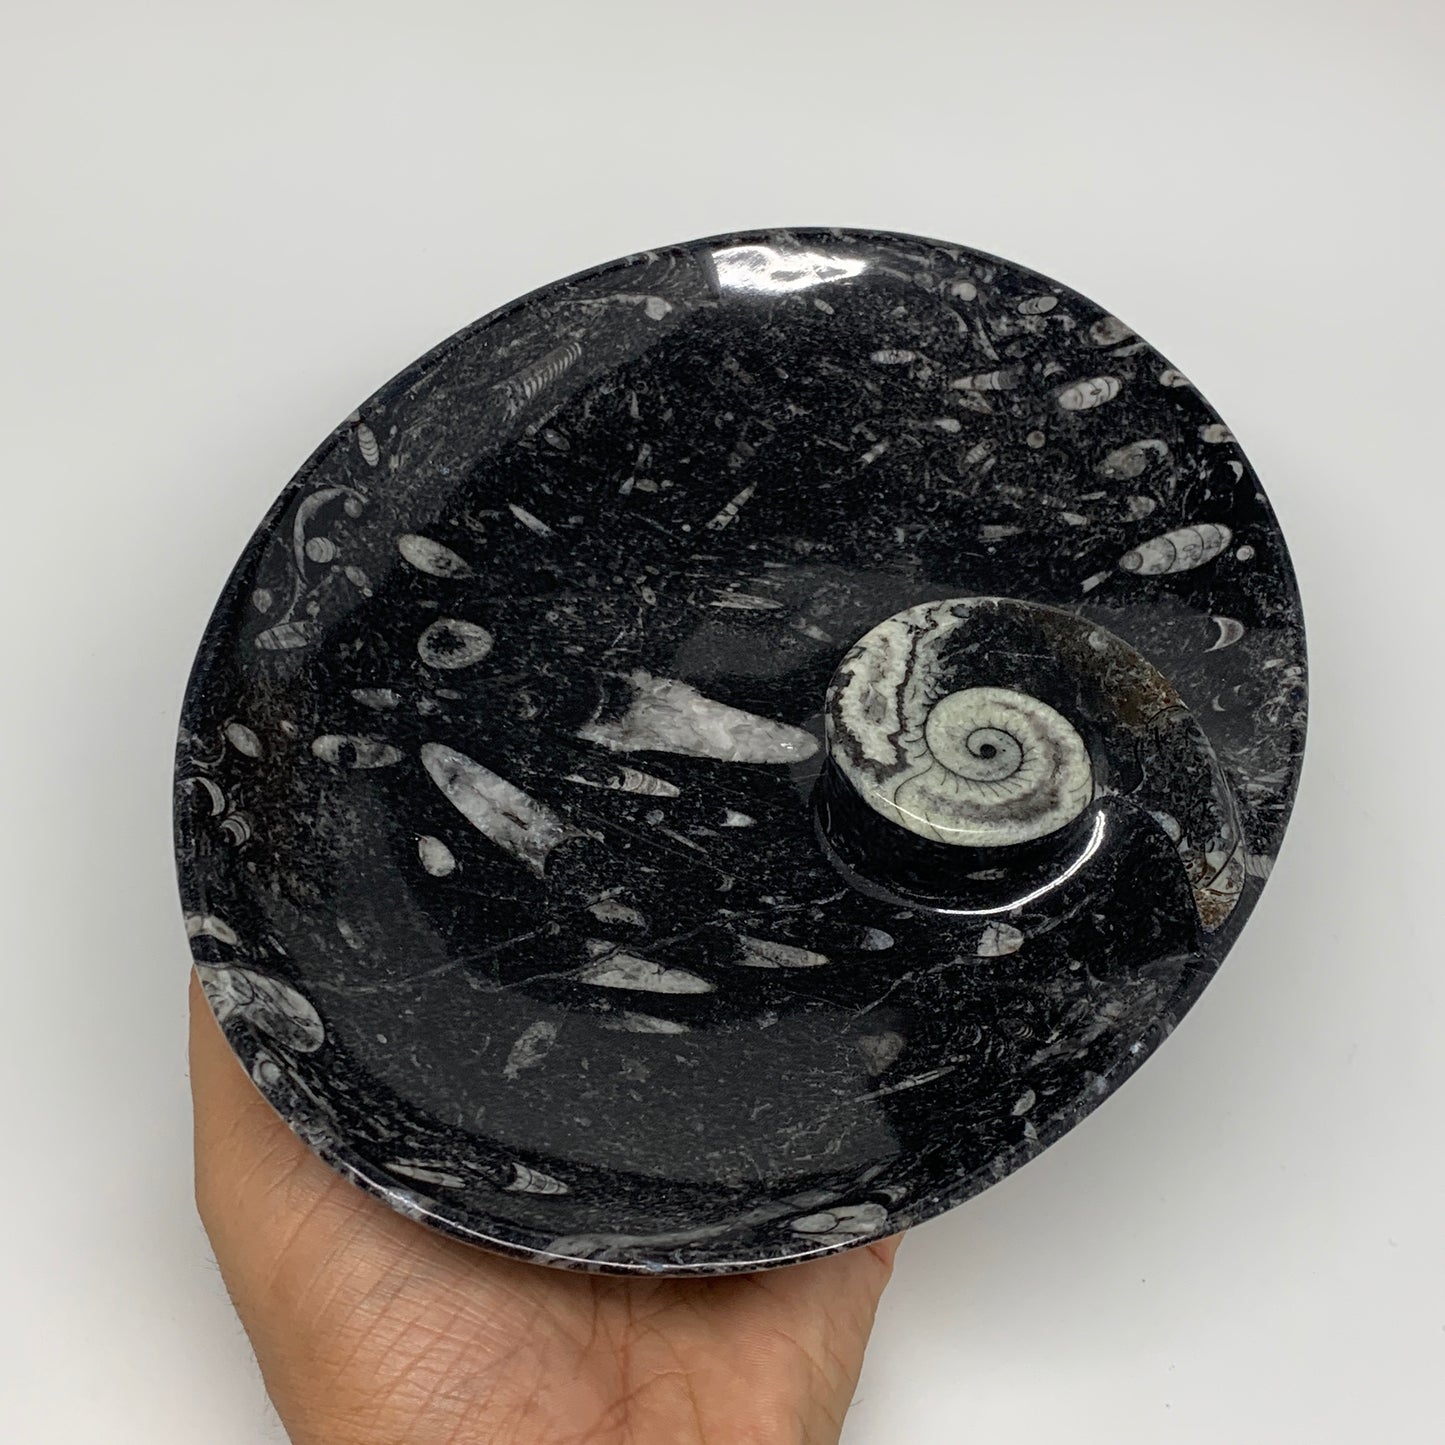 742g, 8.75"x6.5" Black Fossils Ammonite Orthoceras Bowl Oval Ring @Morocco,B8392